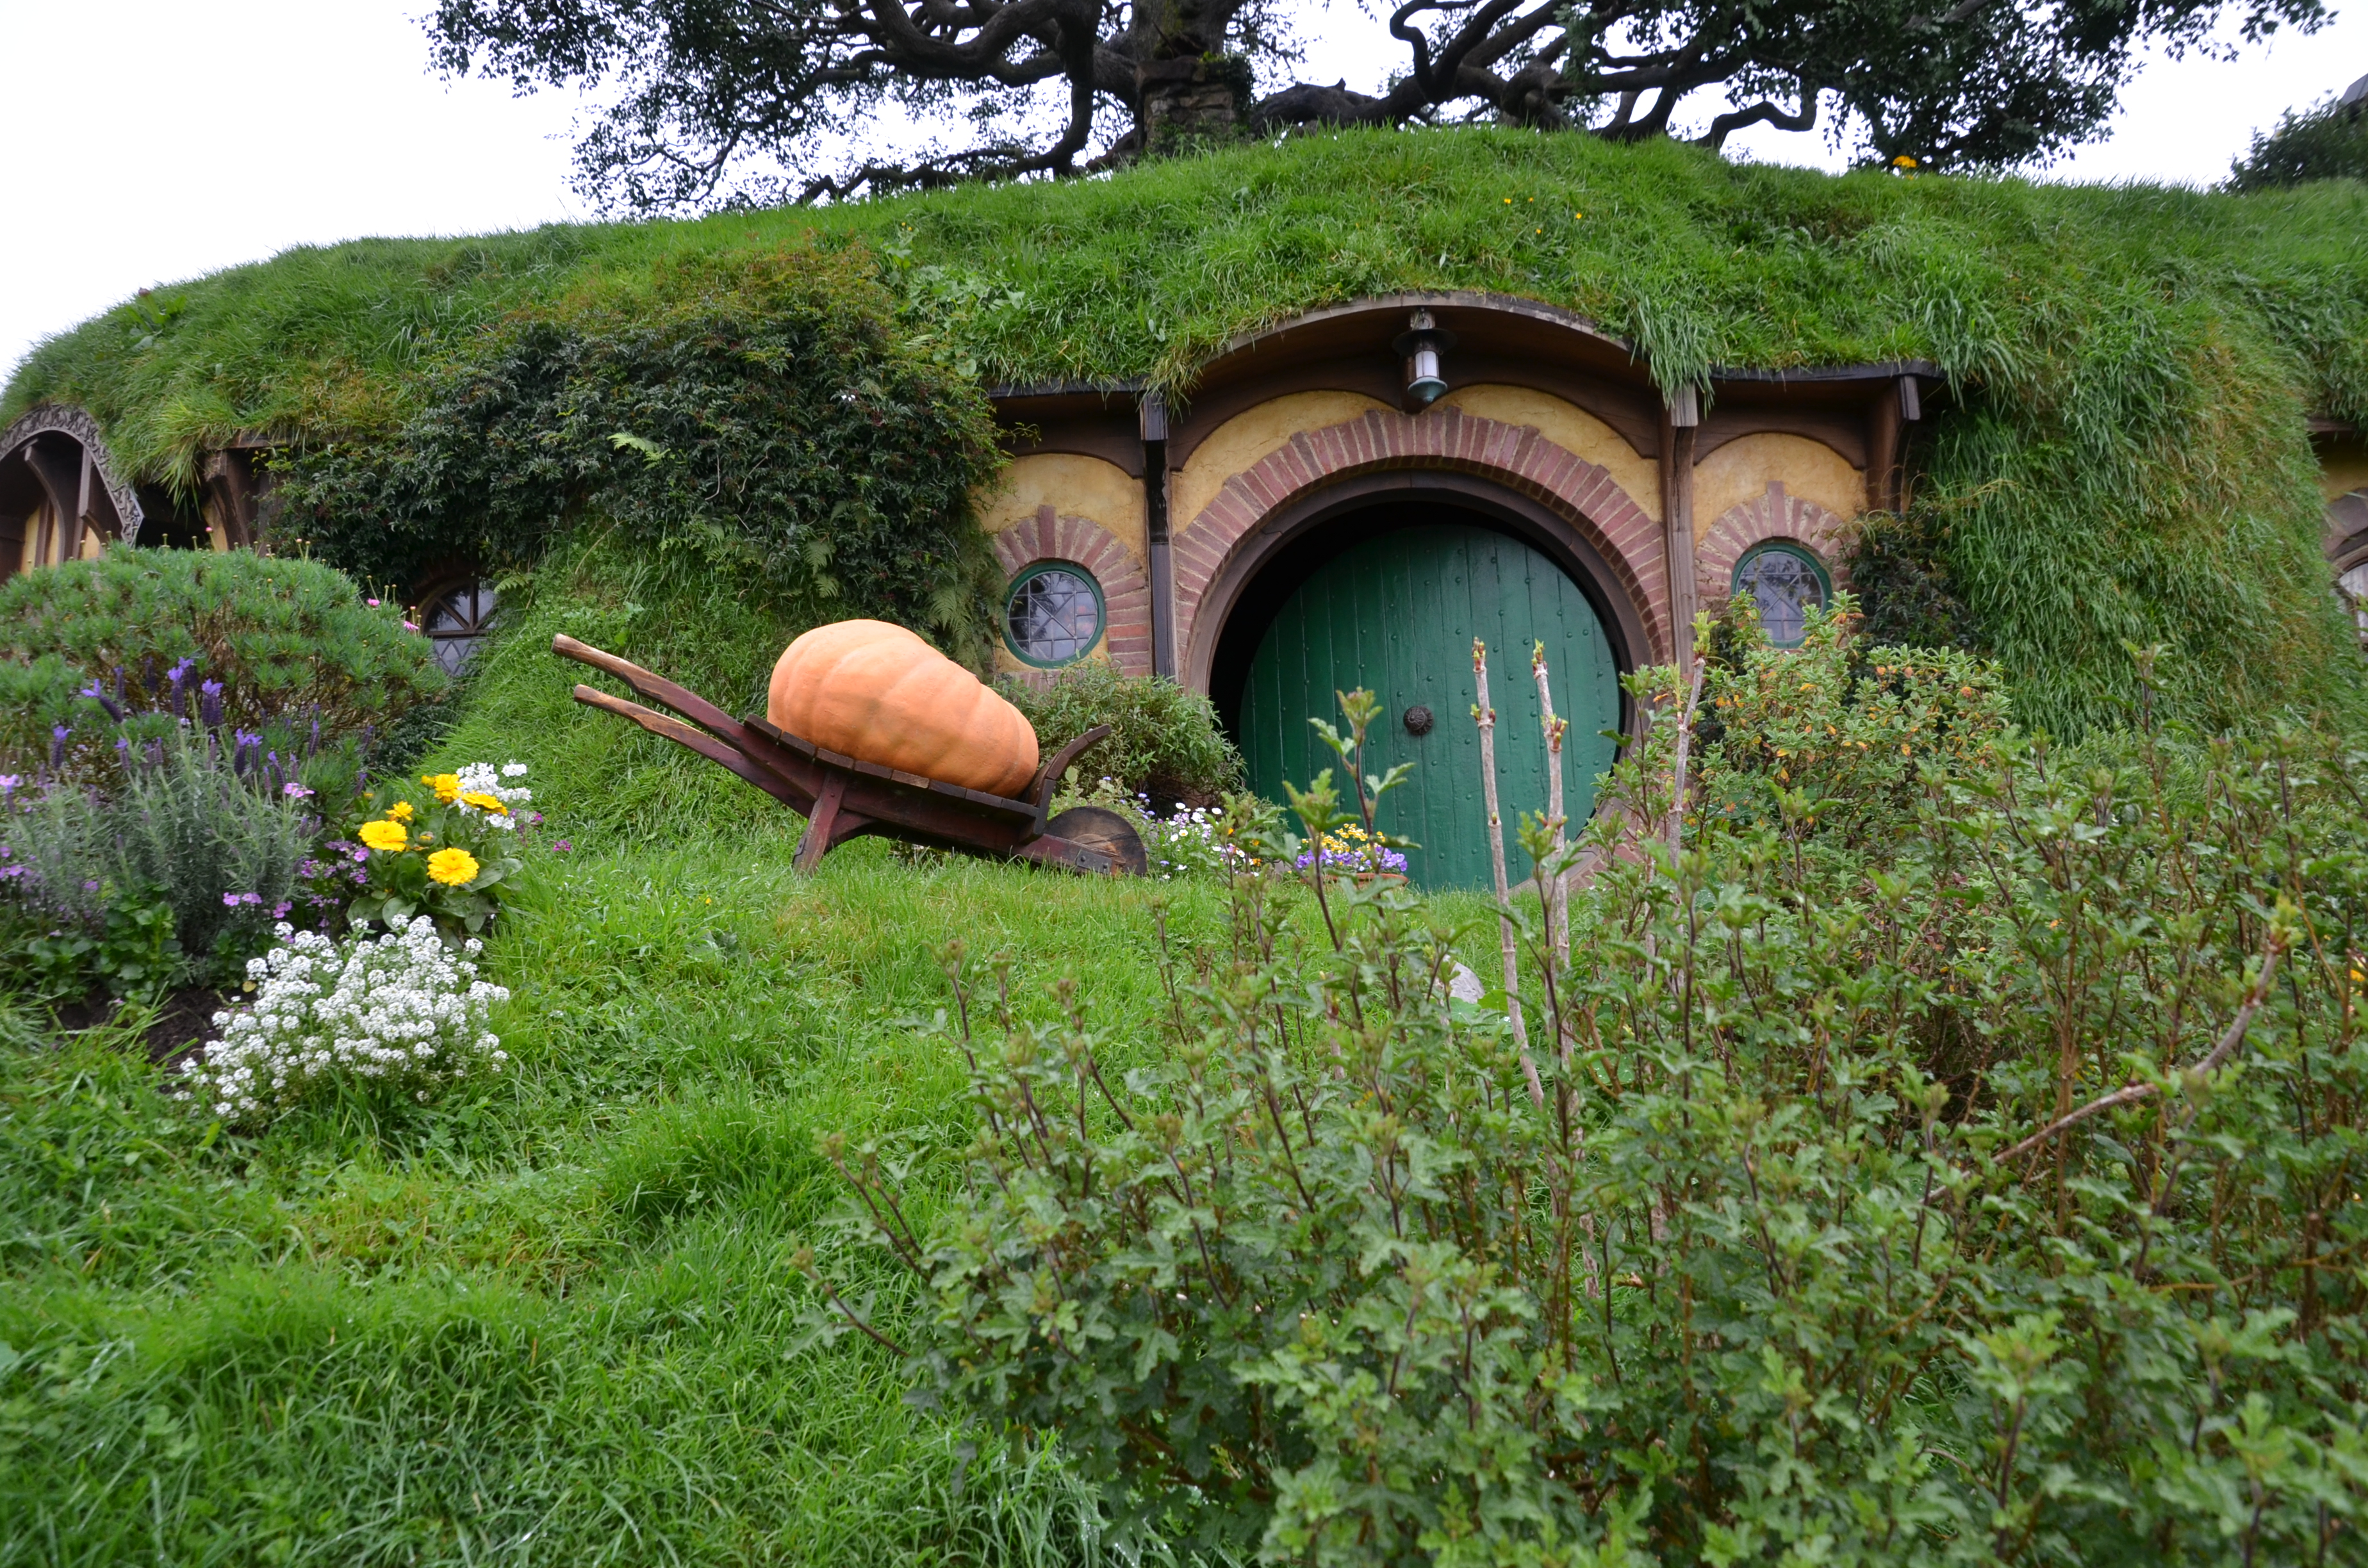 LOTR Hobbiton Bilbo Baggins' Bag End hobbit-hole: Frodo's room.